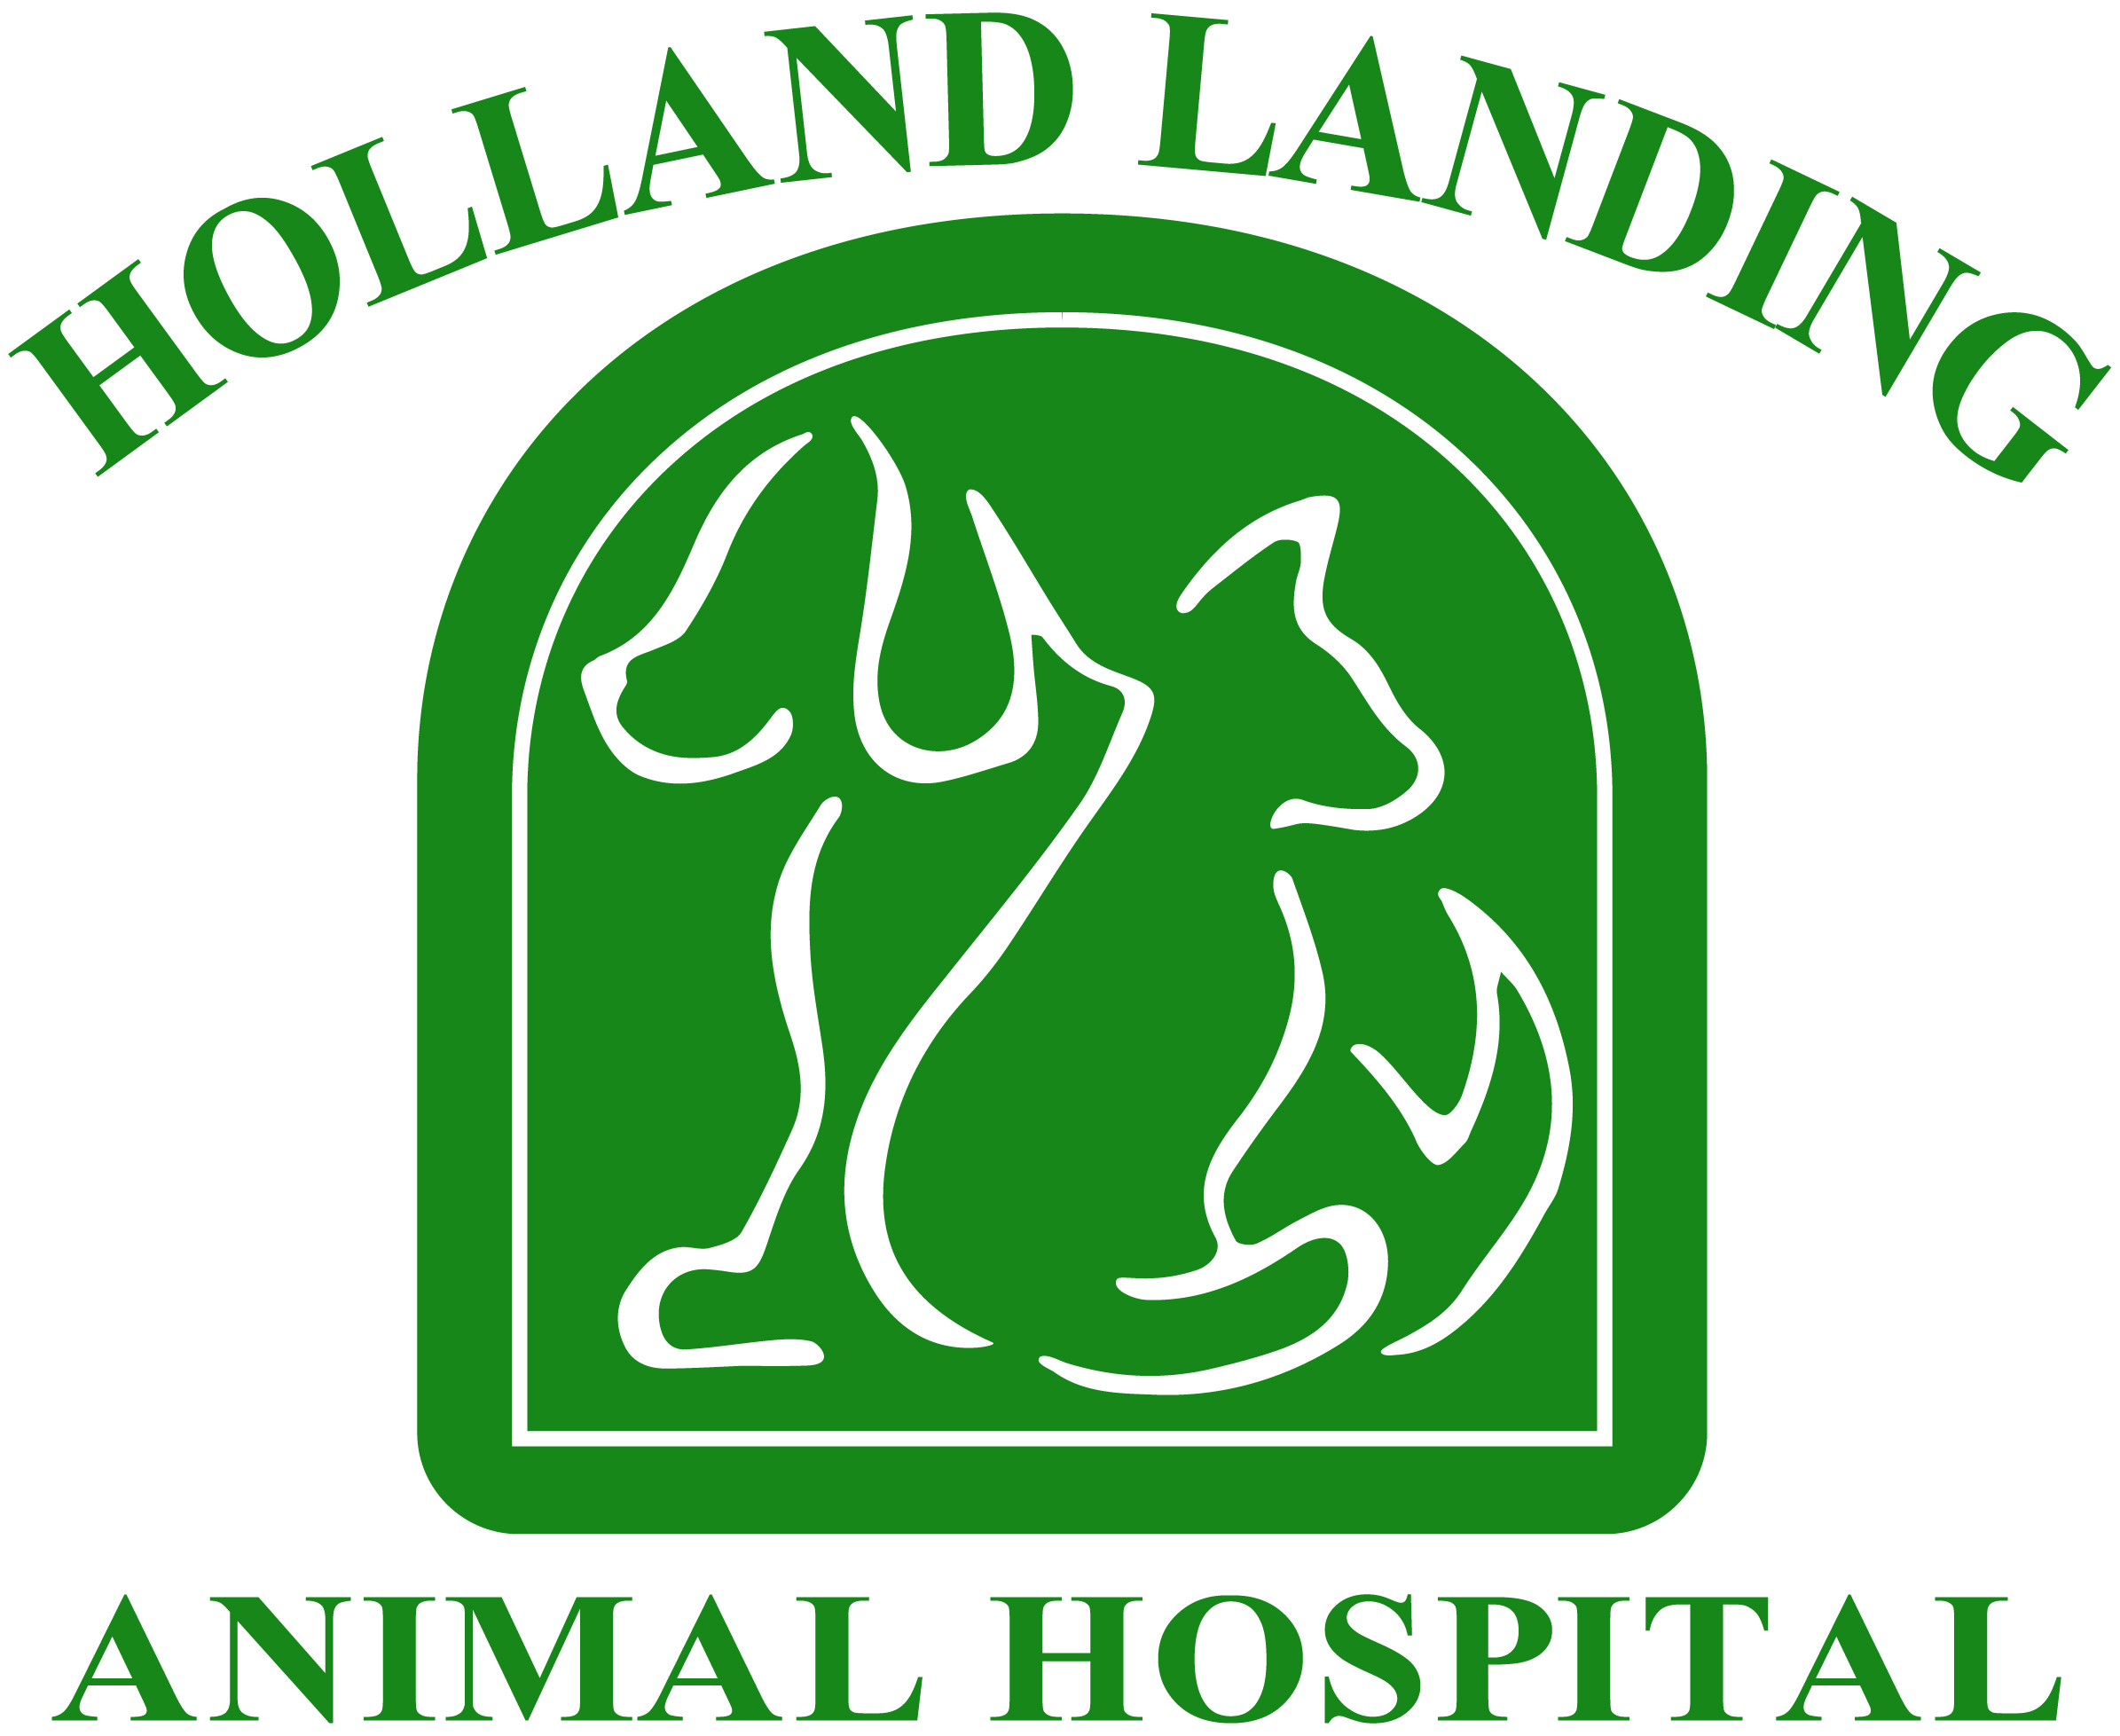 Holland Landing Animal Hospital